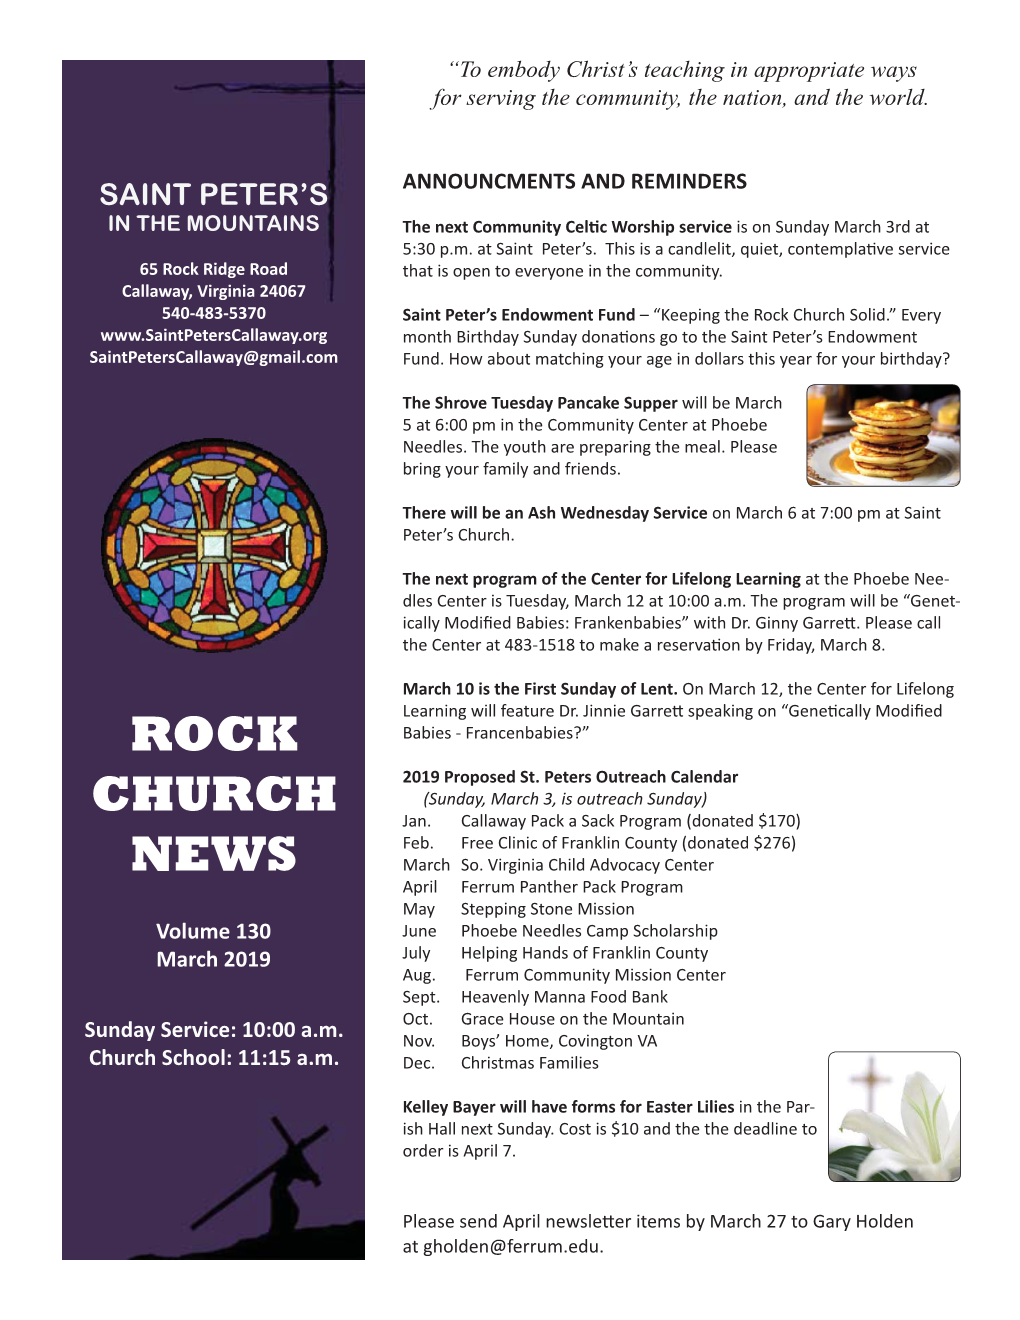 Rock Church News